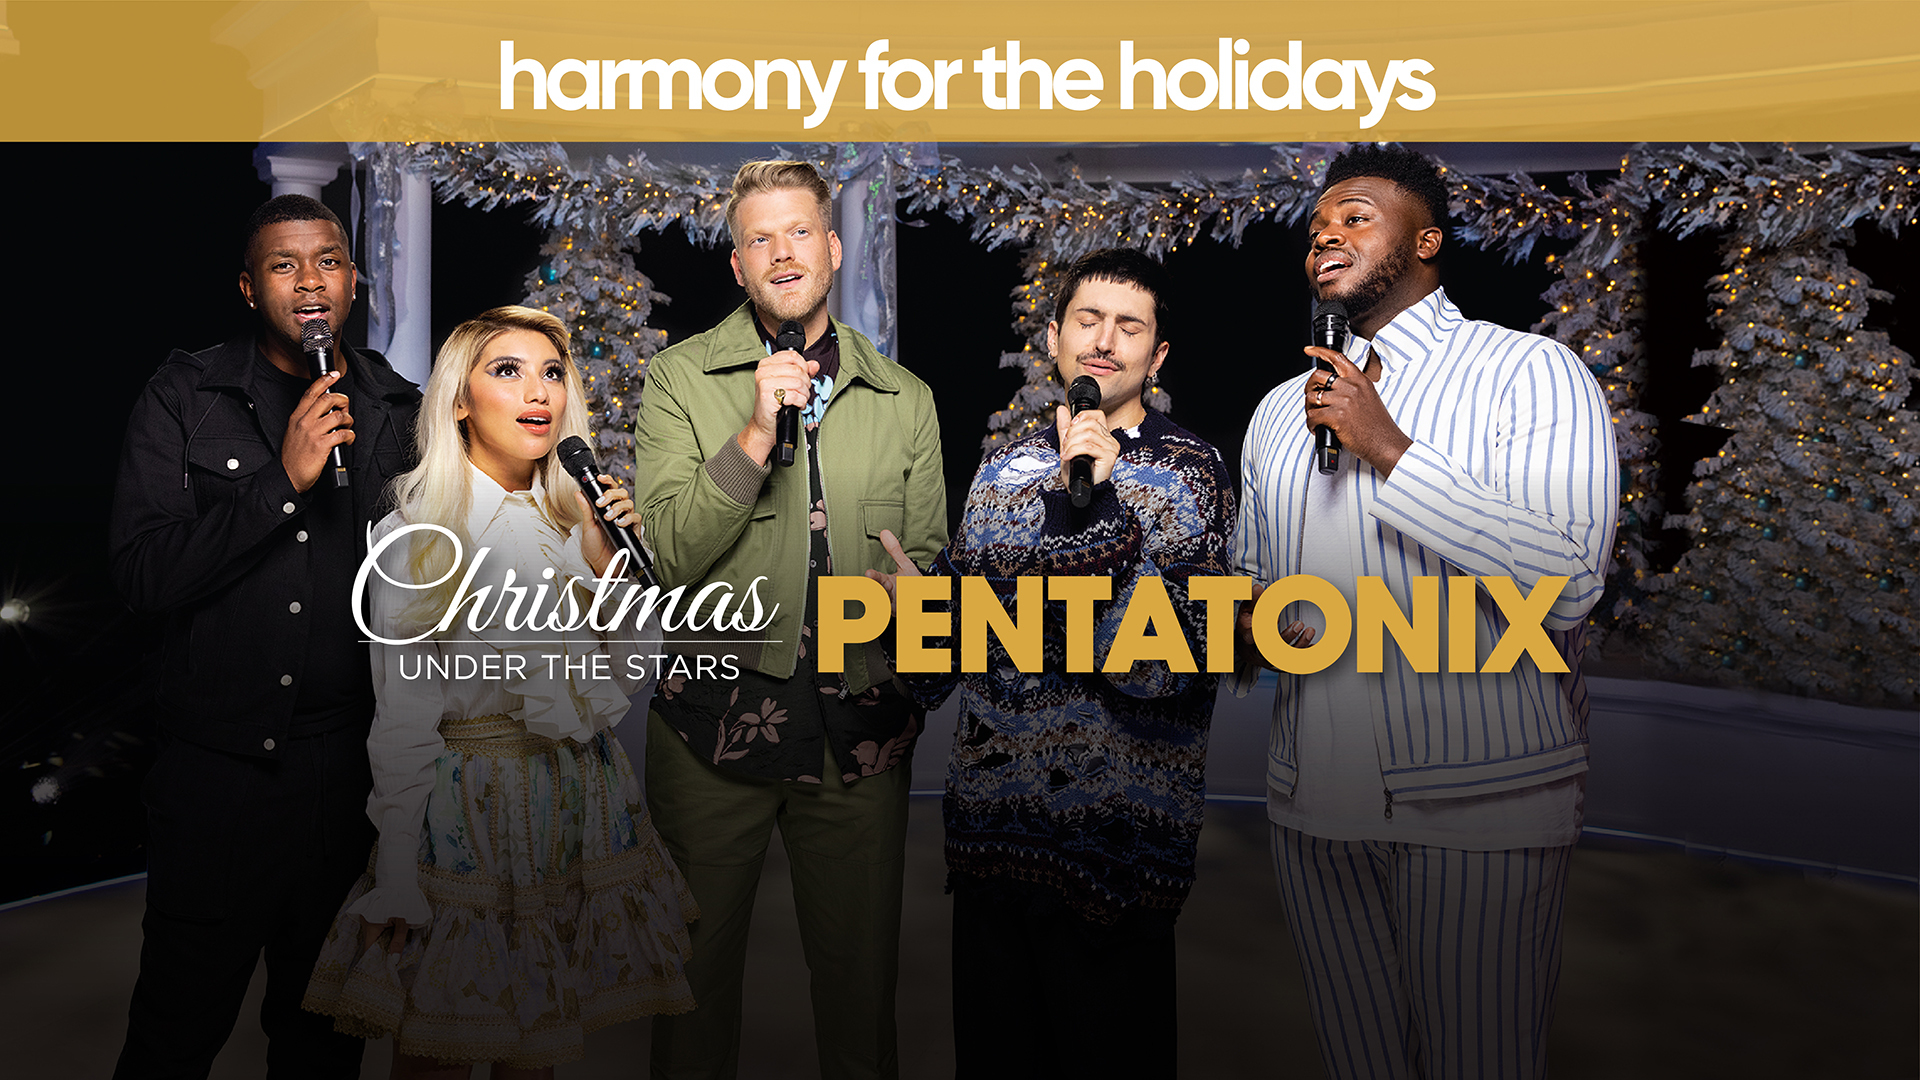 Christmas Under the Stars with Pentatonix